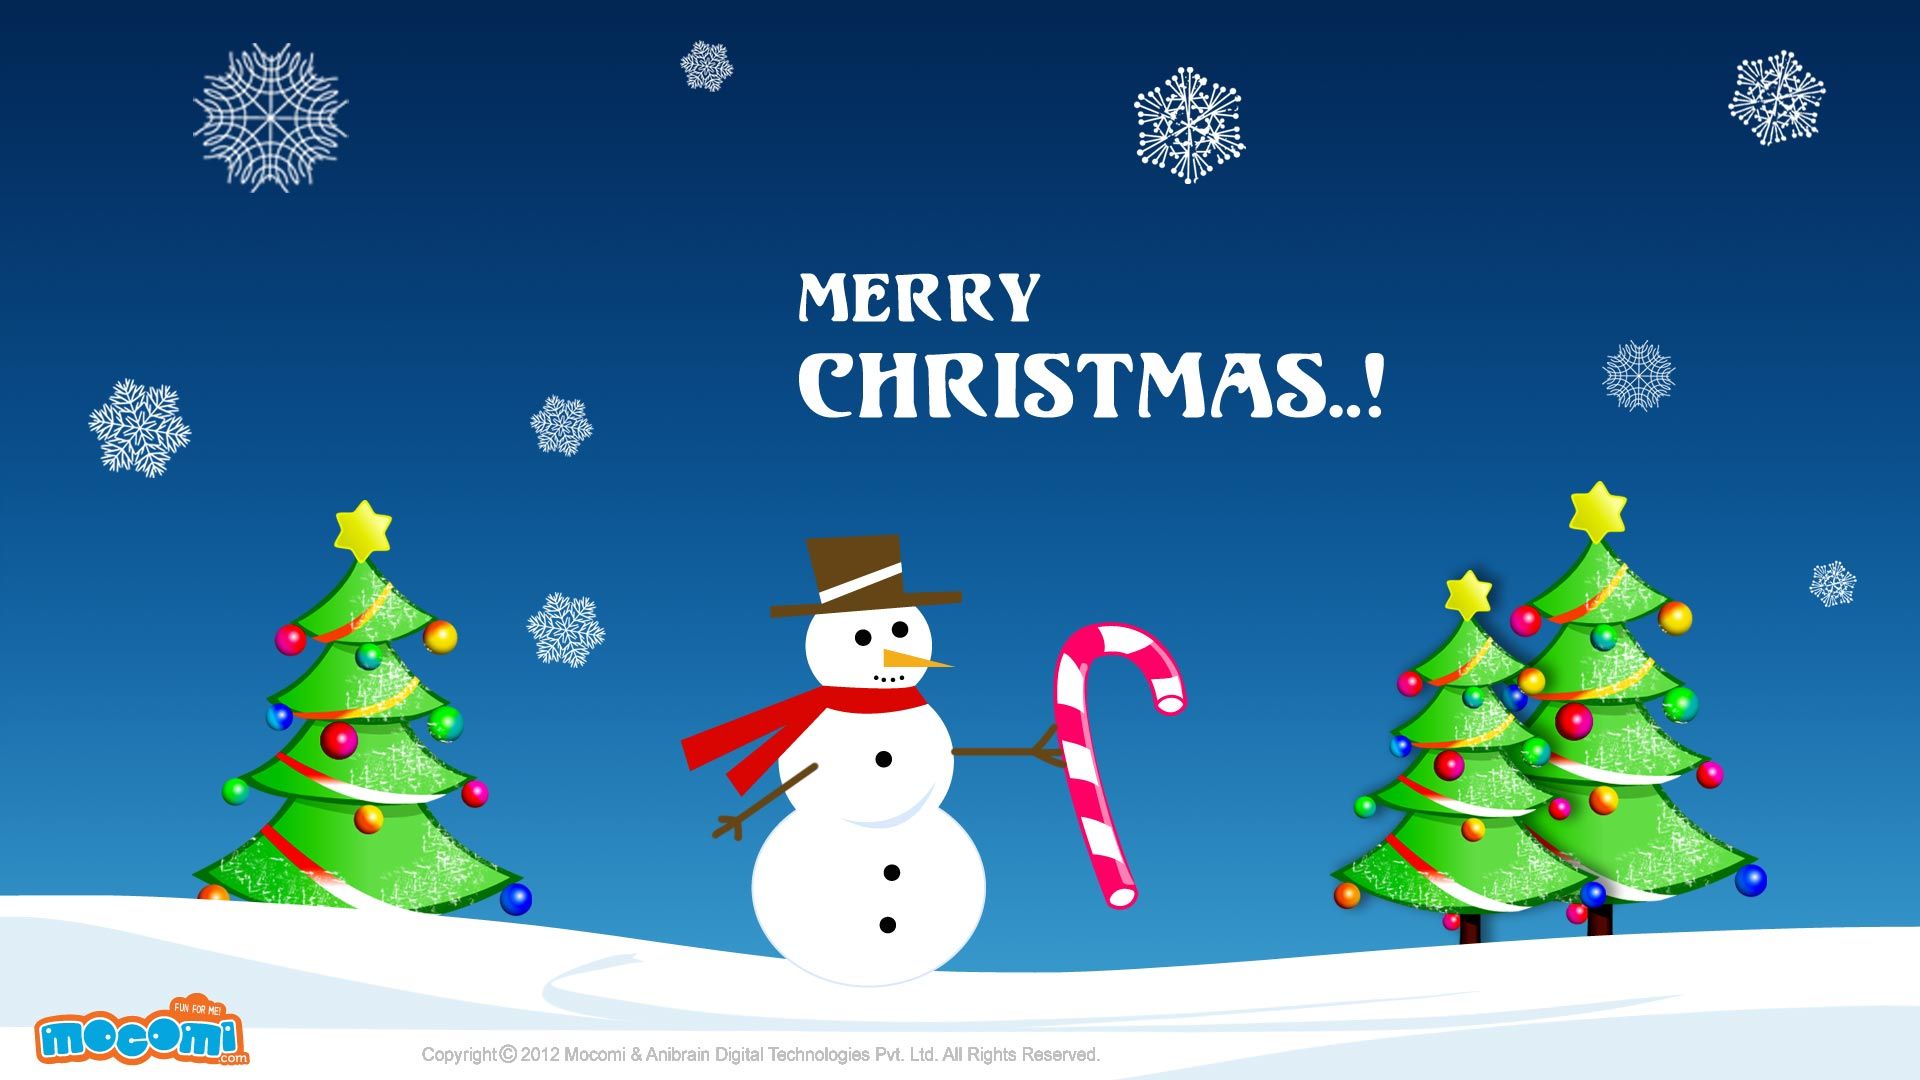 Merry Christmas Snowman Wallpaper for Kids